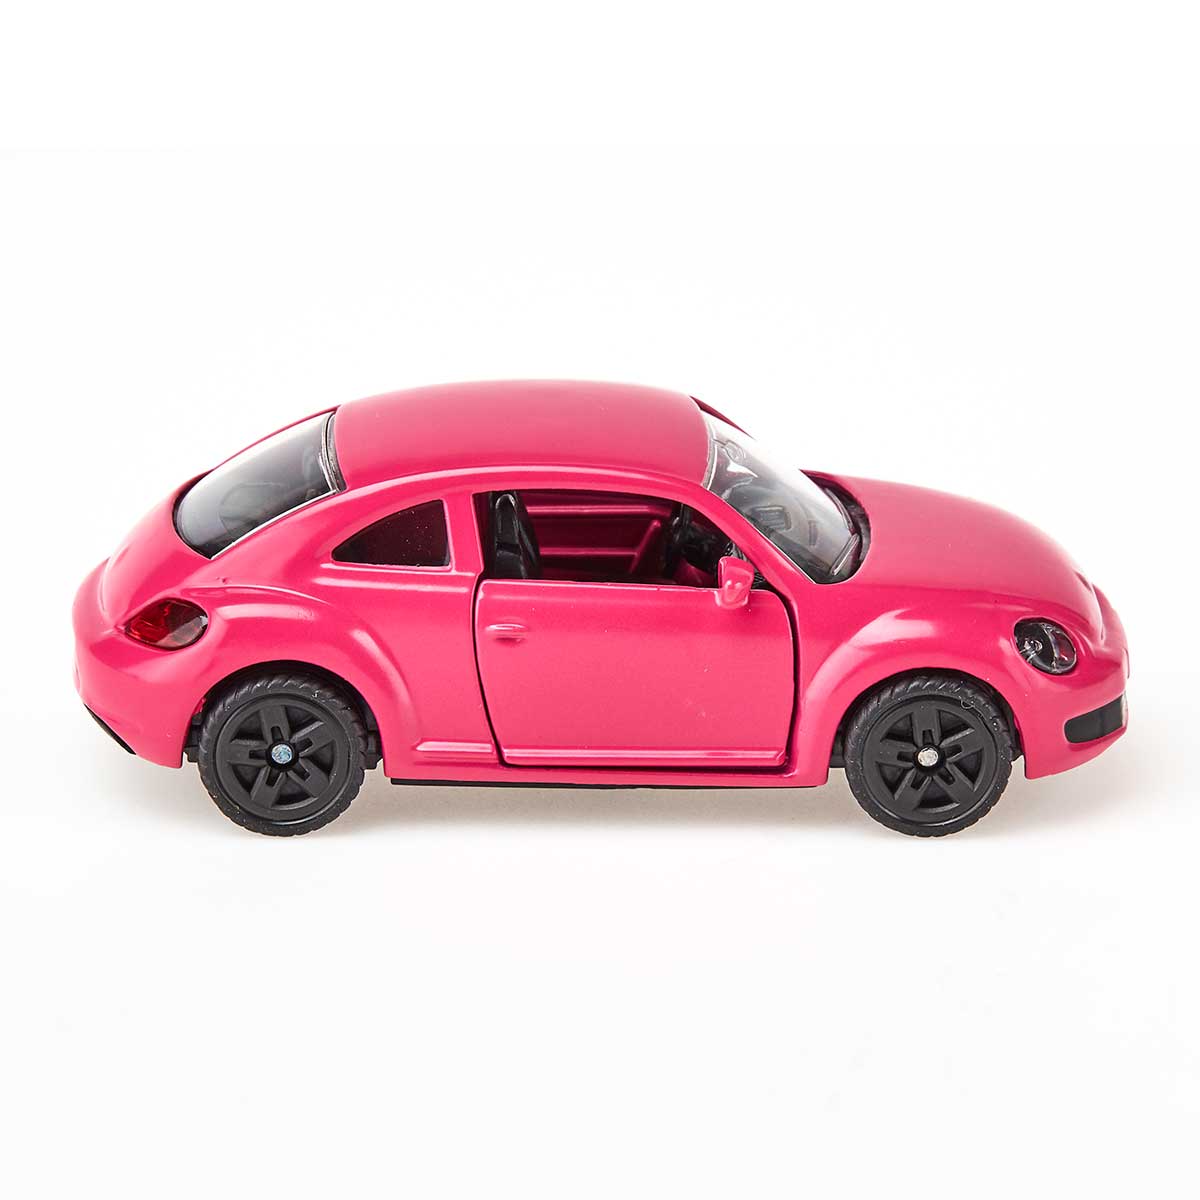 VWザ・ビートル ピンク: ボーネルンド オンラインショップ。世界中の 